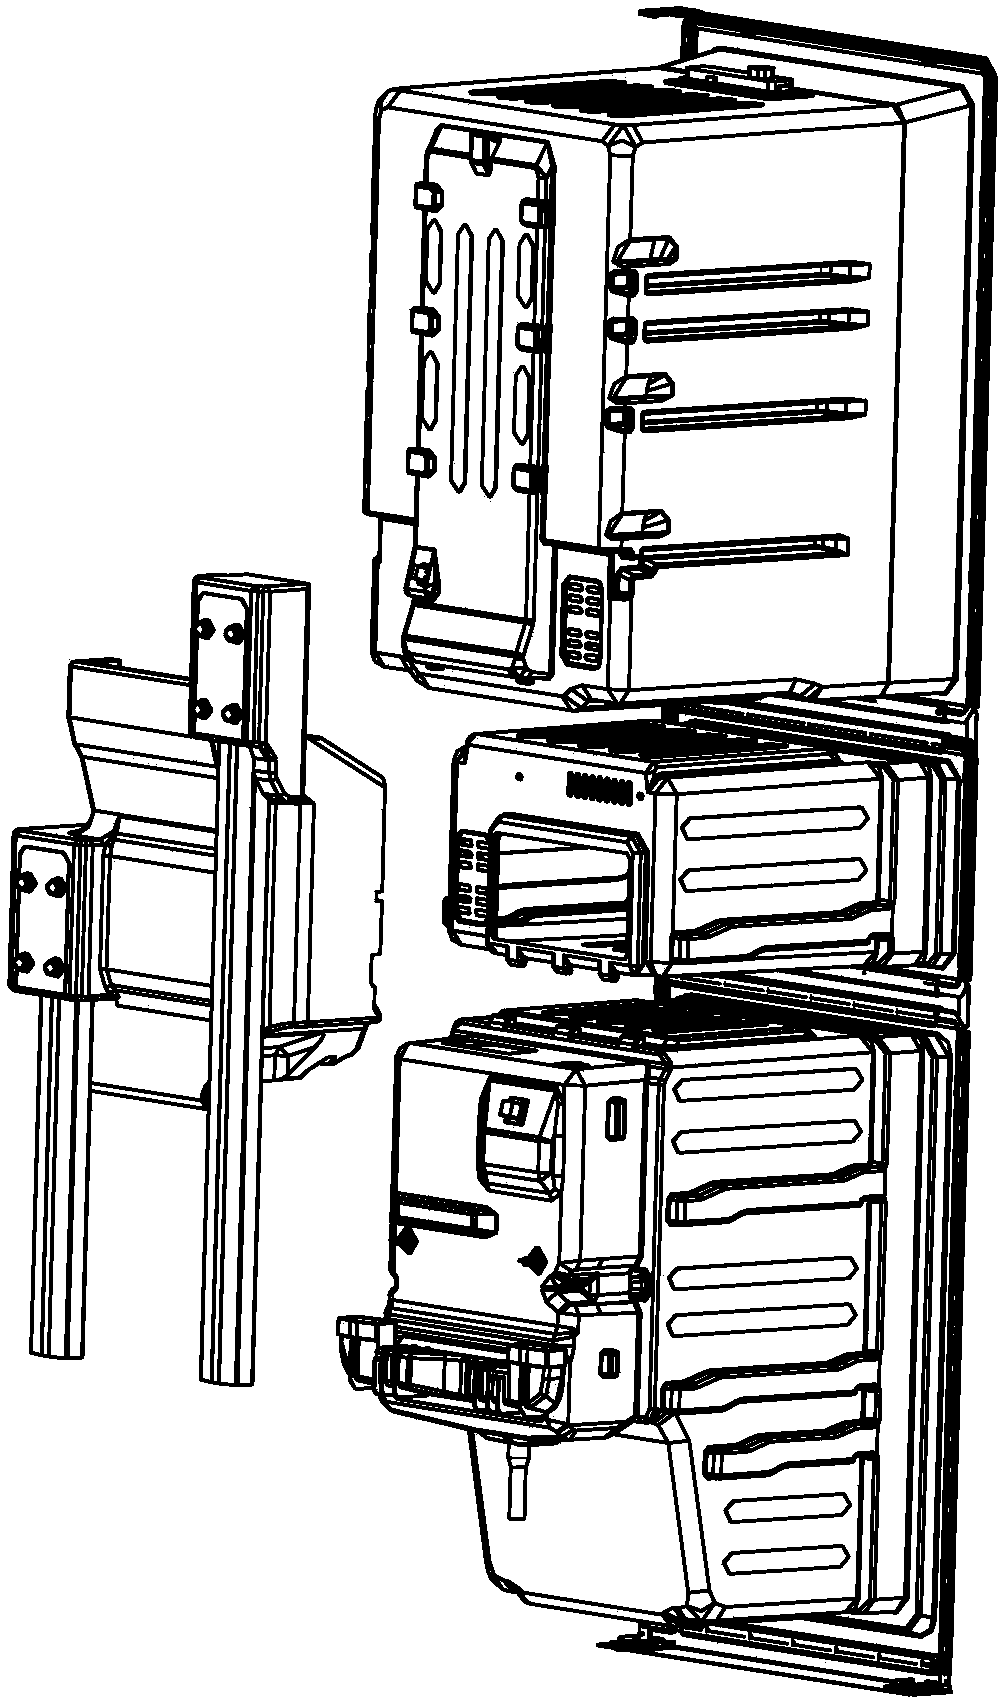 Refrigerator air way structure